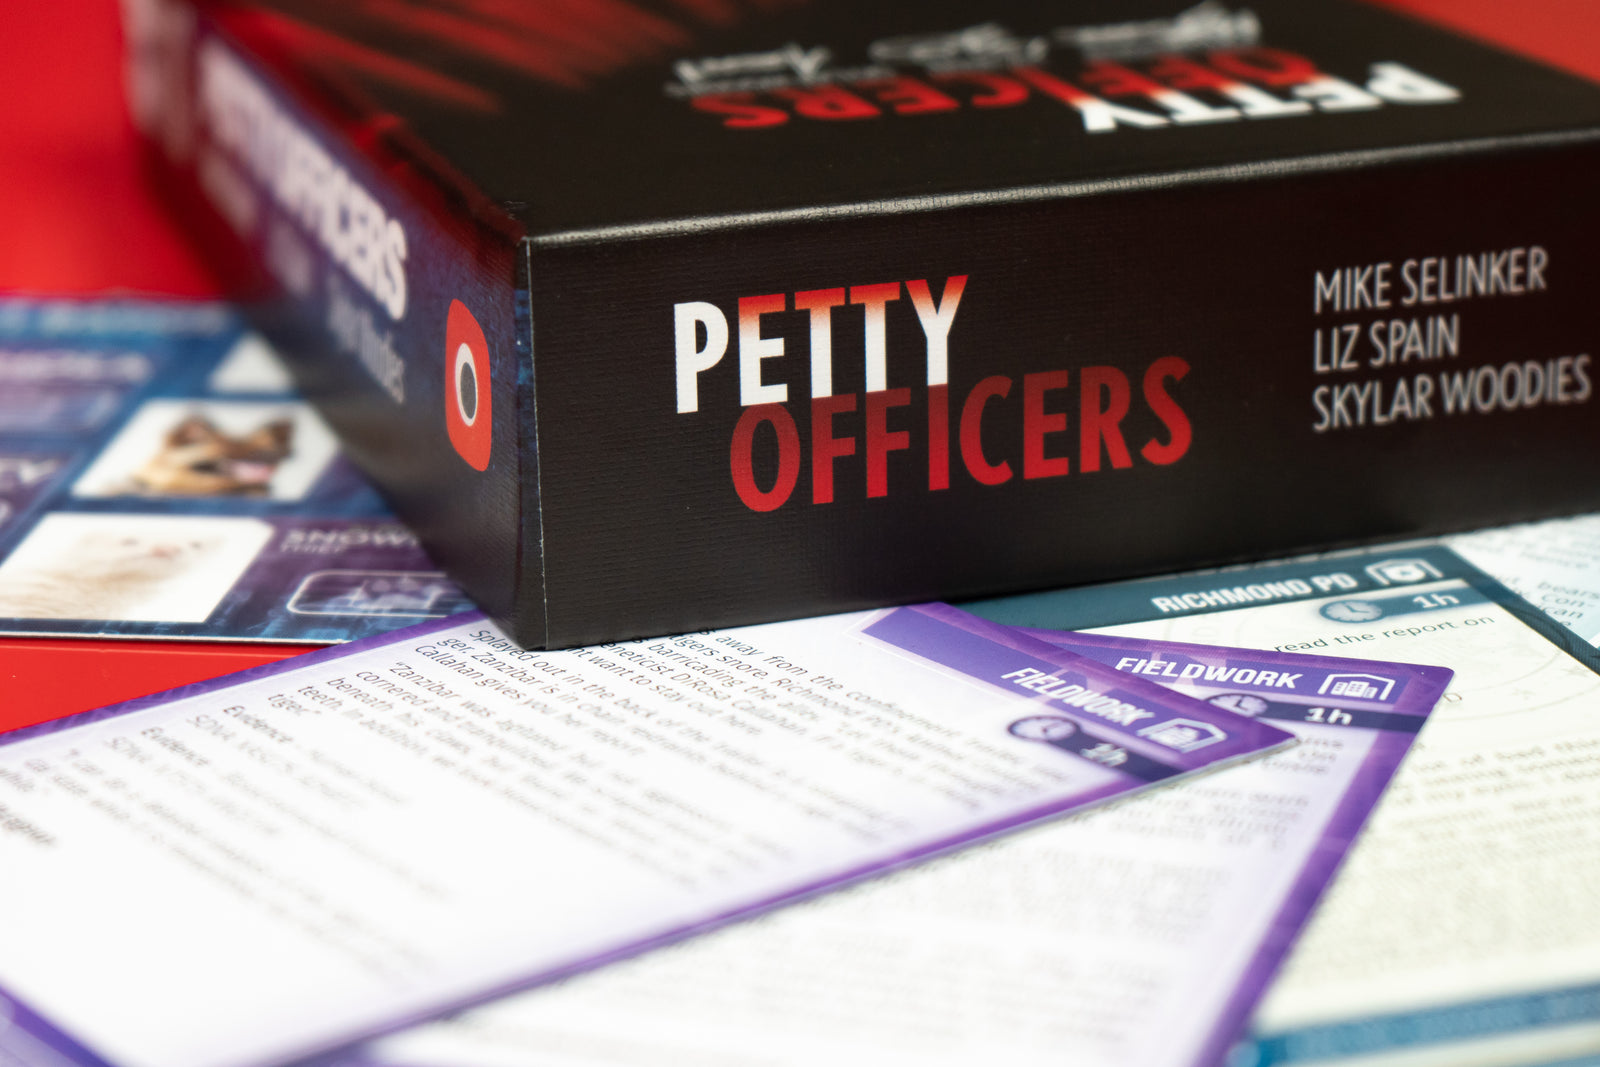 Expansão Detective: Signature Series - Petty Officers